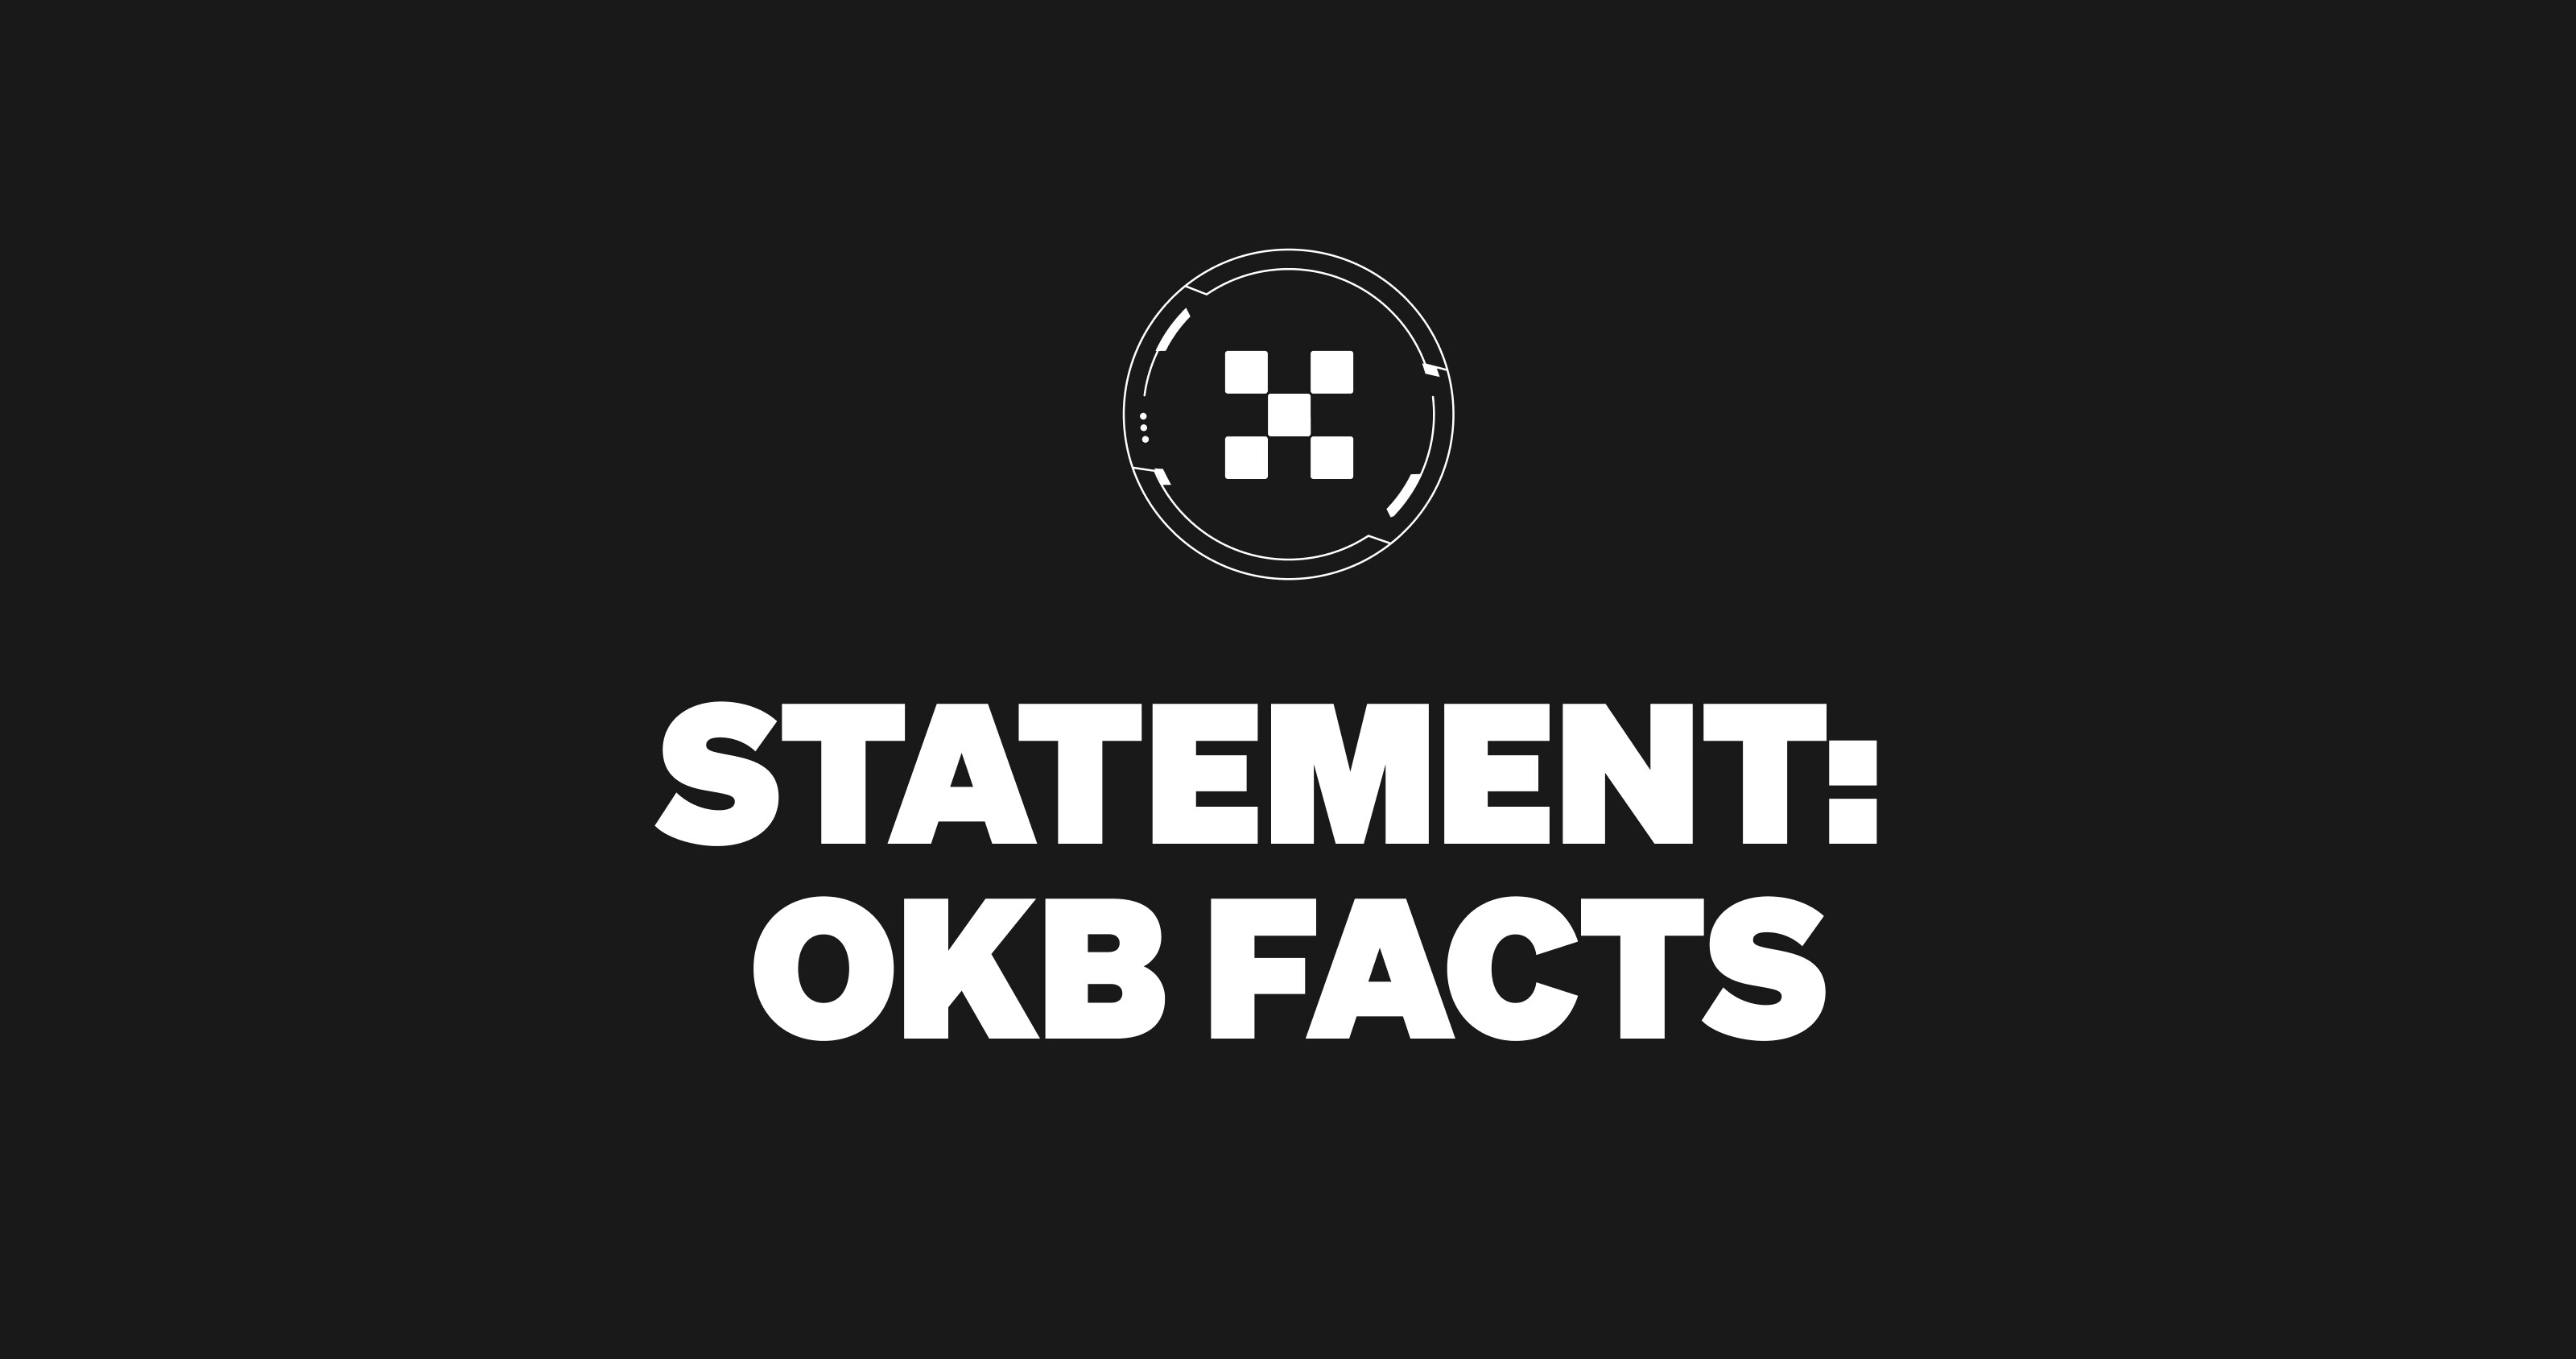 OKX Statement on OKB